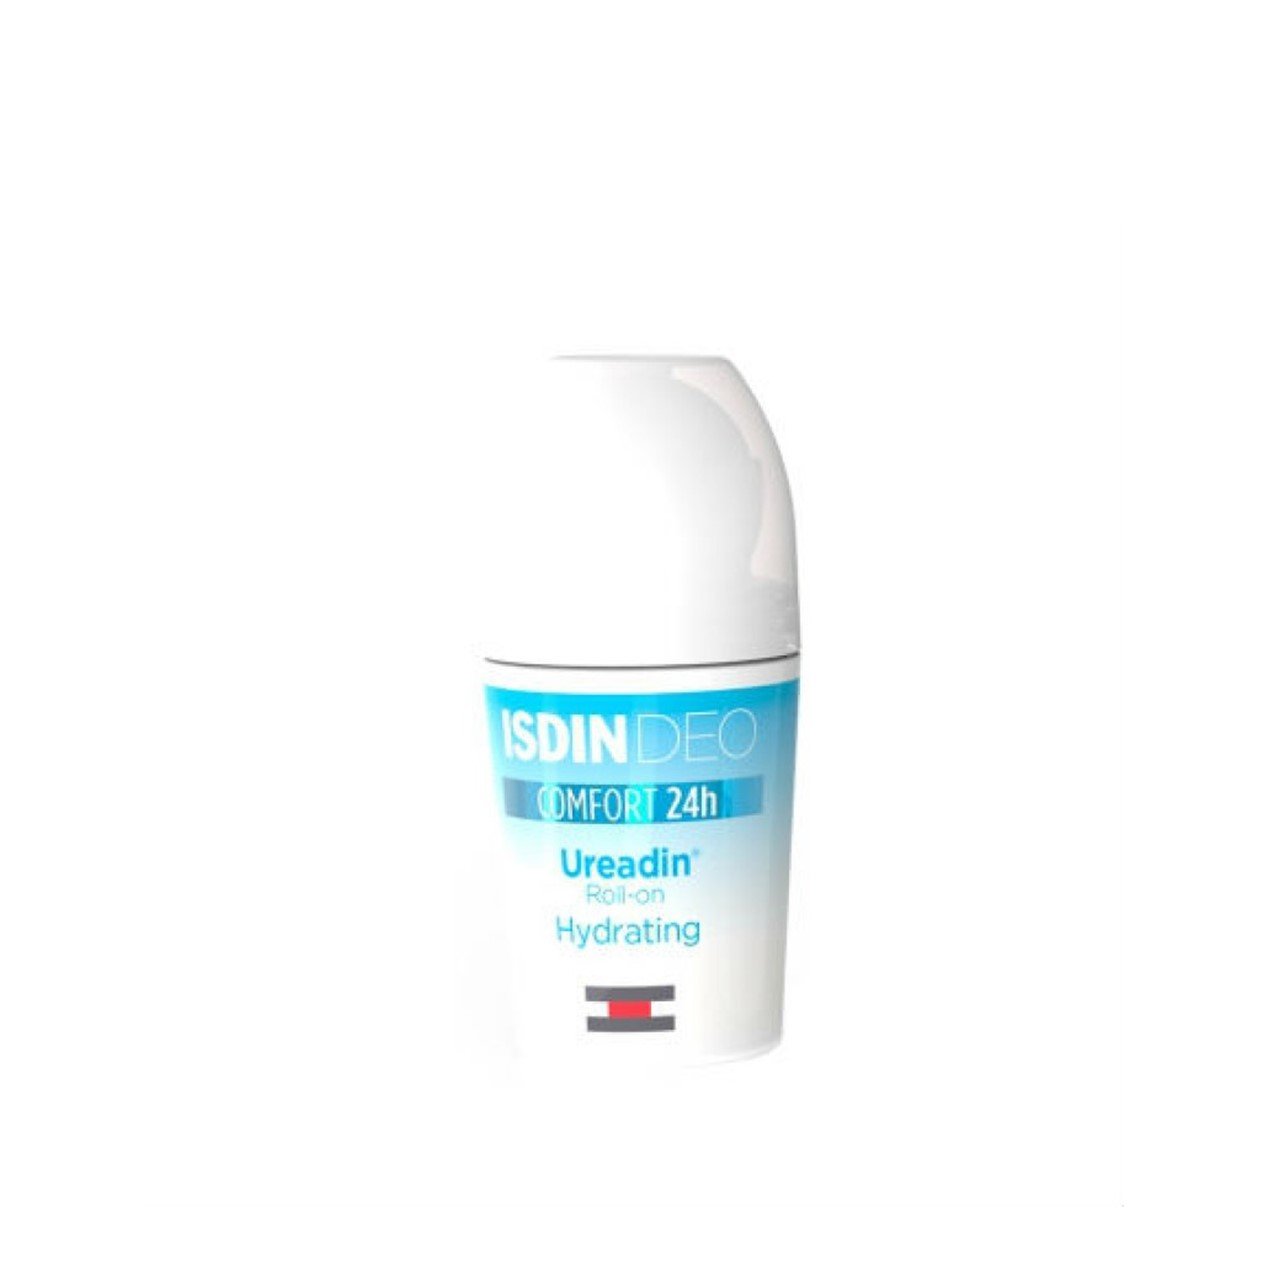 ISDIN Ureadin Comfort 24h Hydrating Deodorant Roll-On 50ml